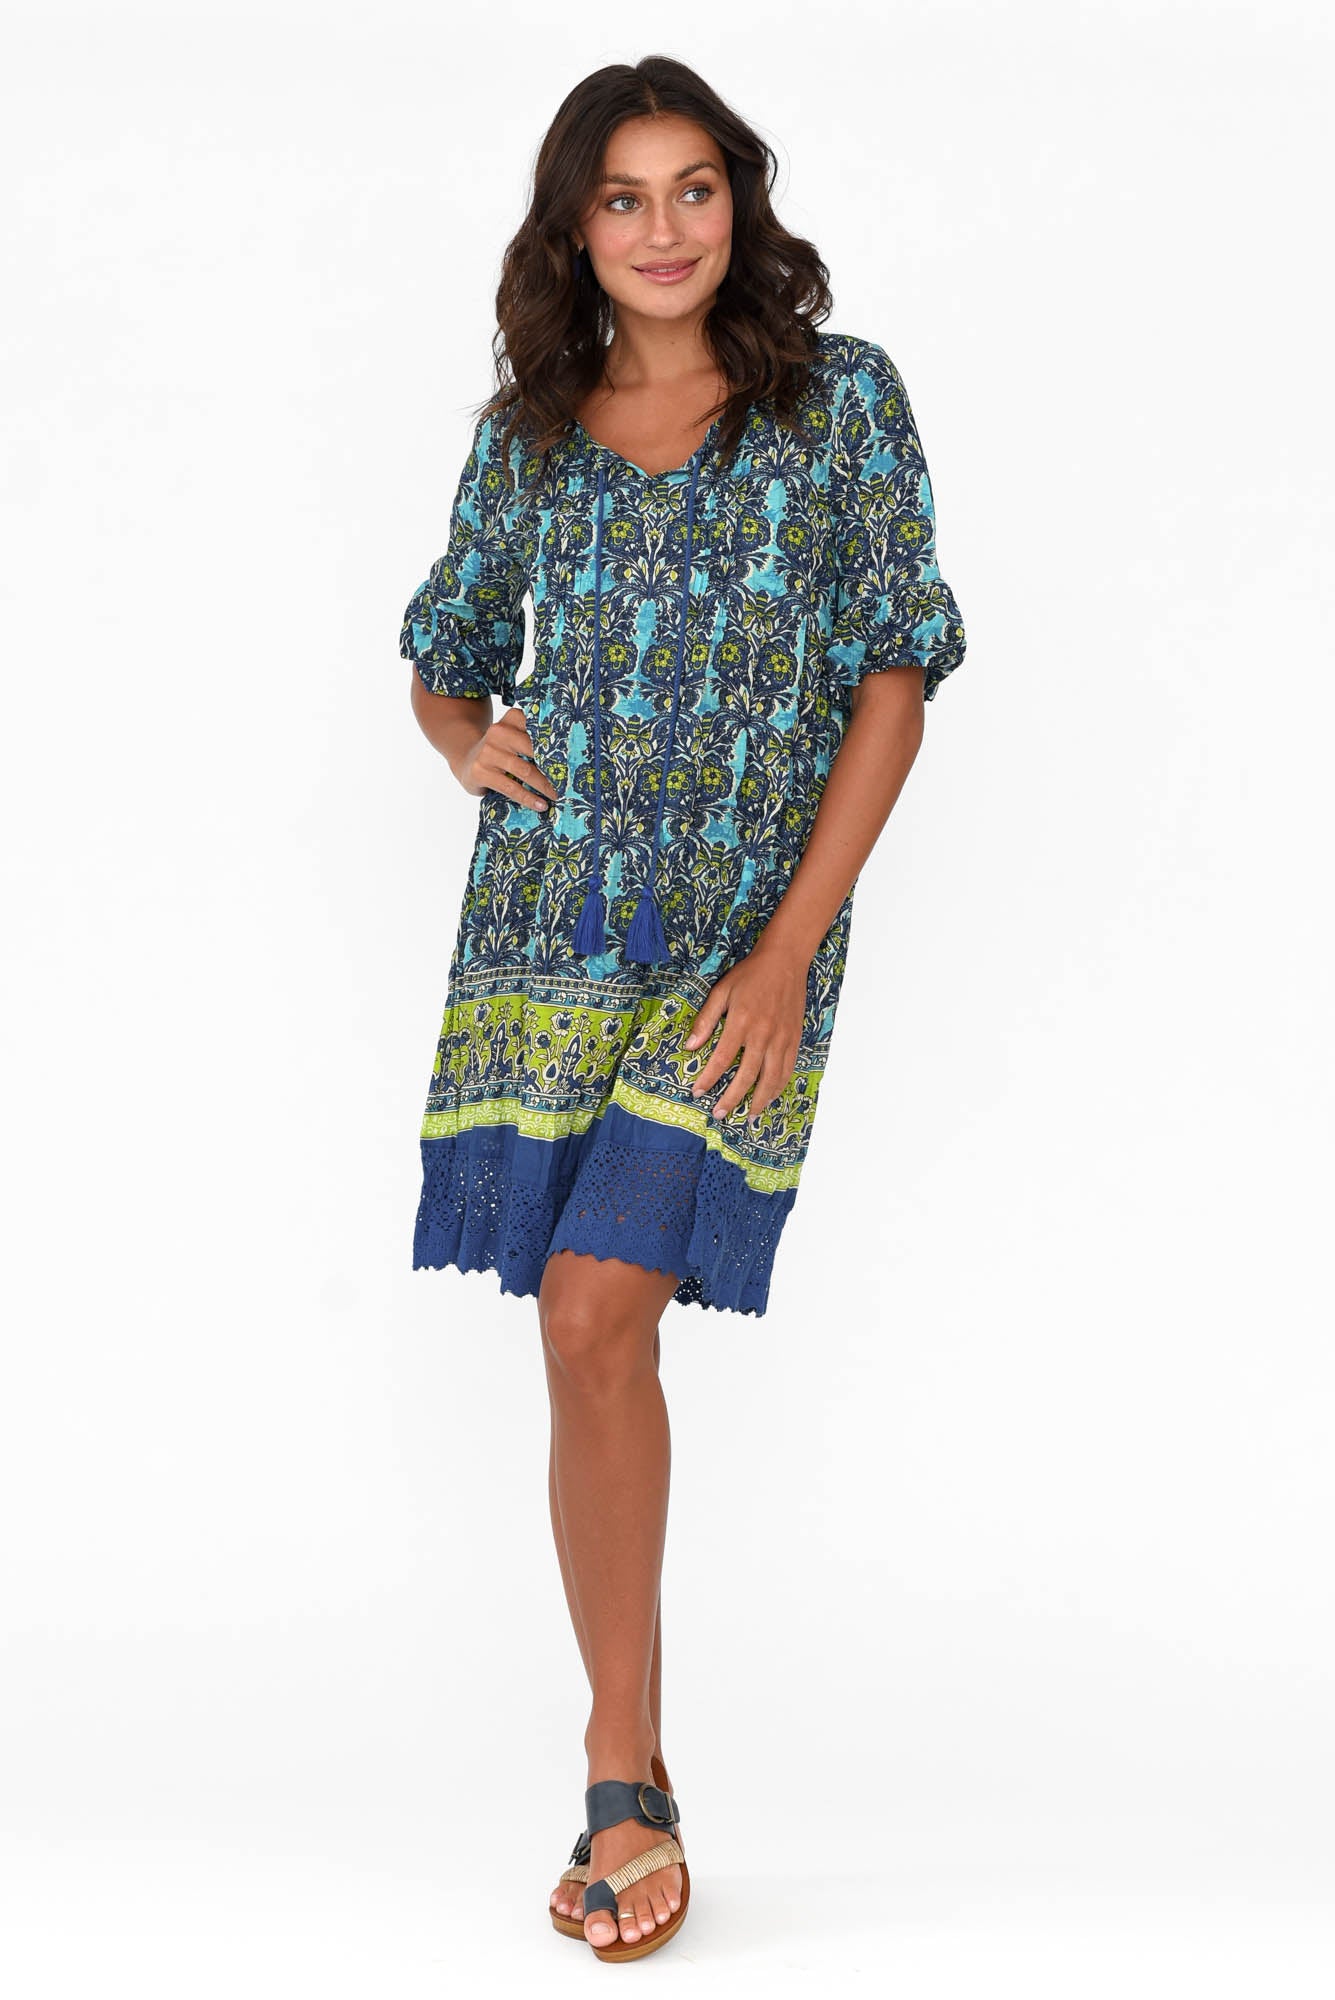 LaovanIn Women's Plus Size Tunic Dress Summer Cotton Linen T Shirt  Knee-Length Dresses, Gray, XL price in UAE | Amazon UAE | kanbkam